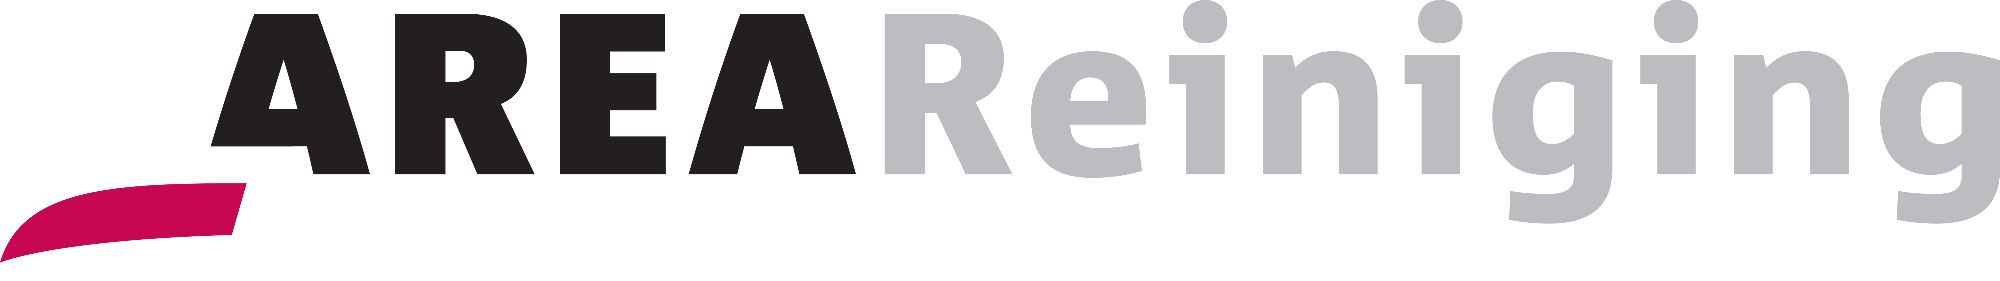 logo van AREA Reiniging